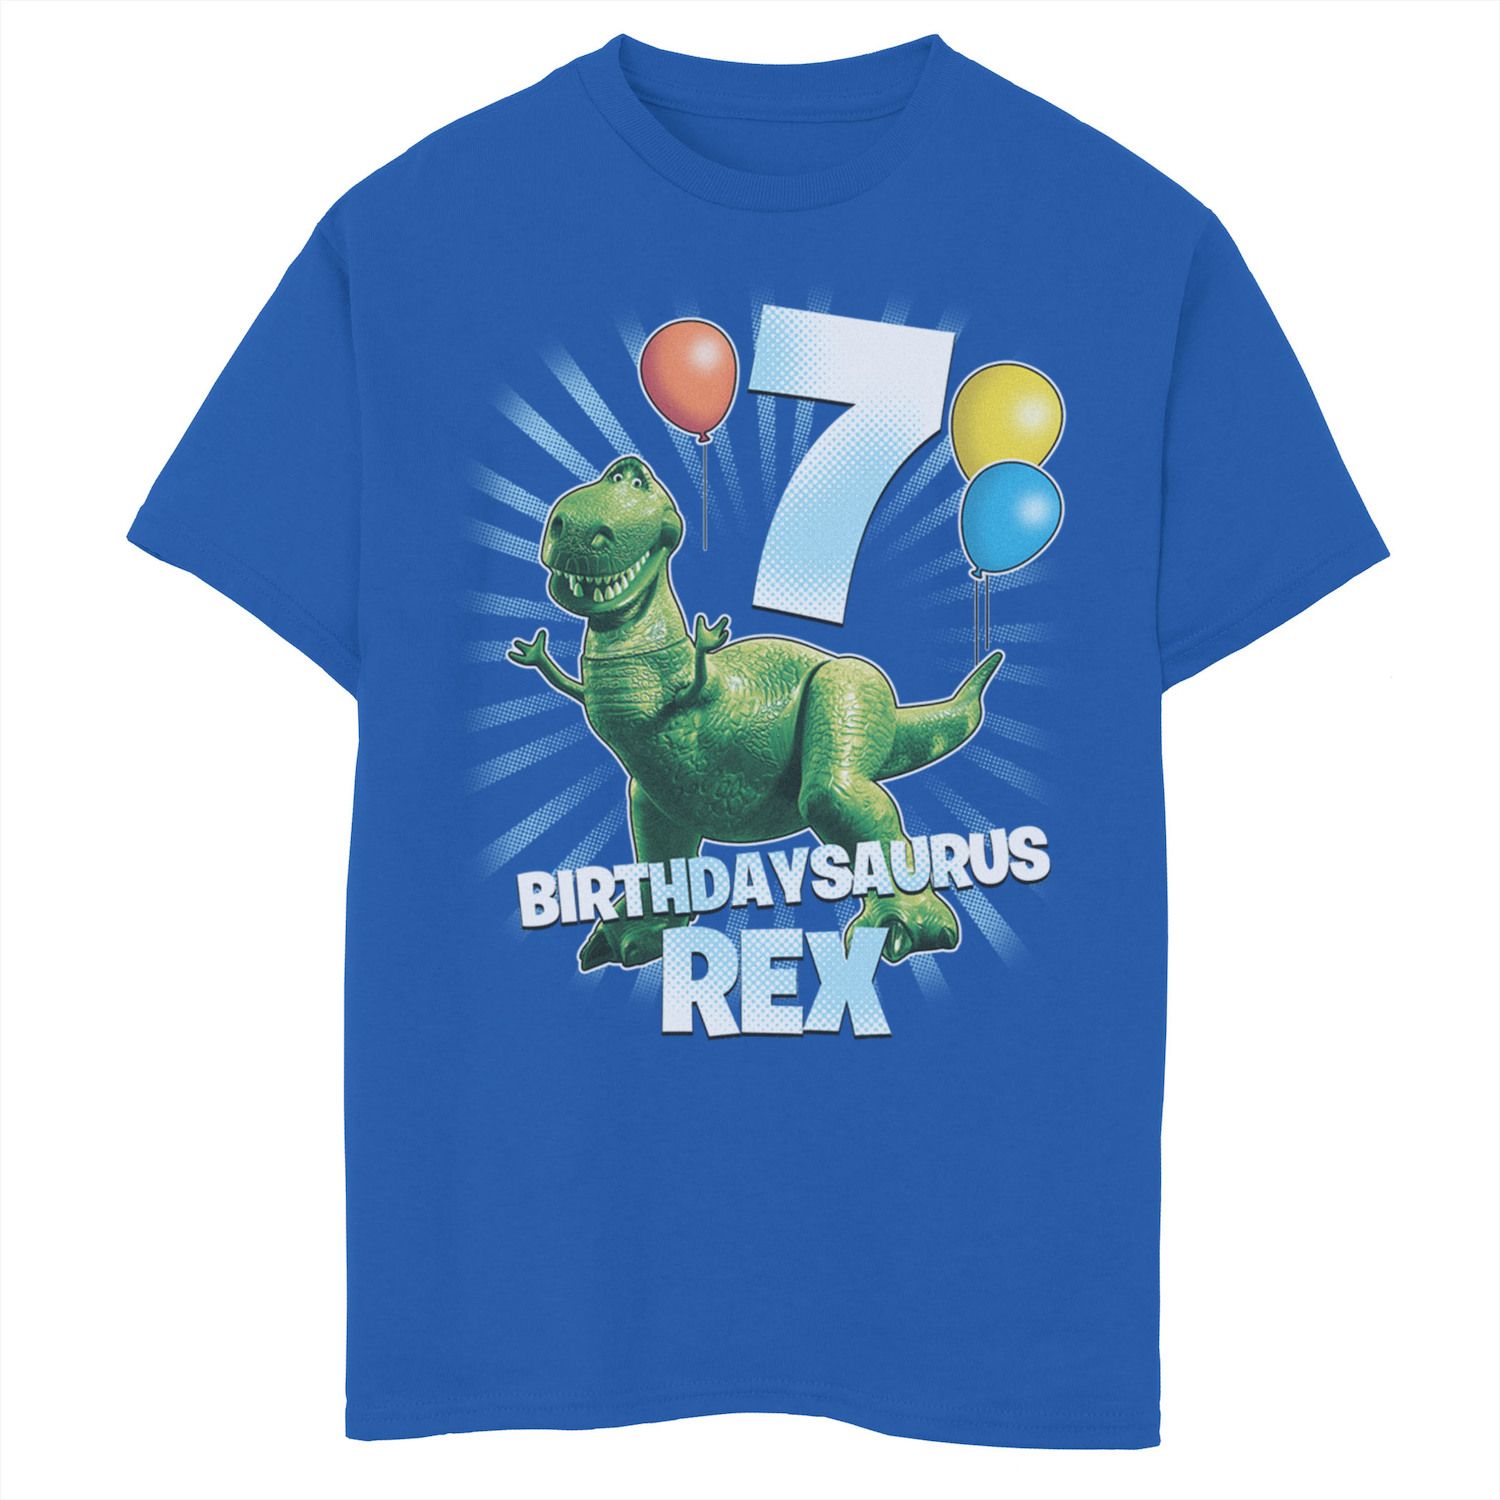 Image for Disney / Pixar Toy Story Boys 8-20 Birthdaysaurus Rex 7th Birthday Graphic Tee at Kohl's.